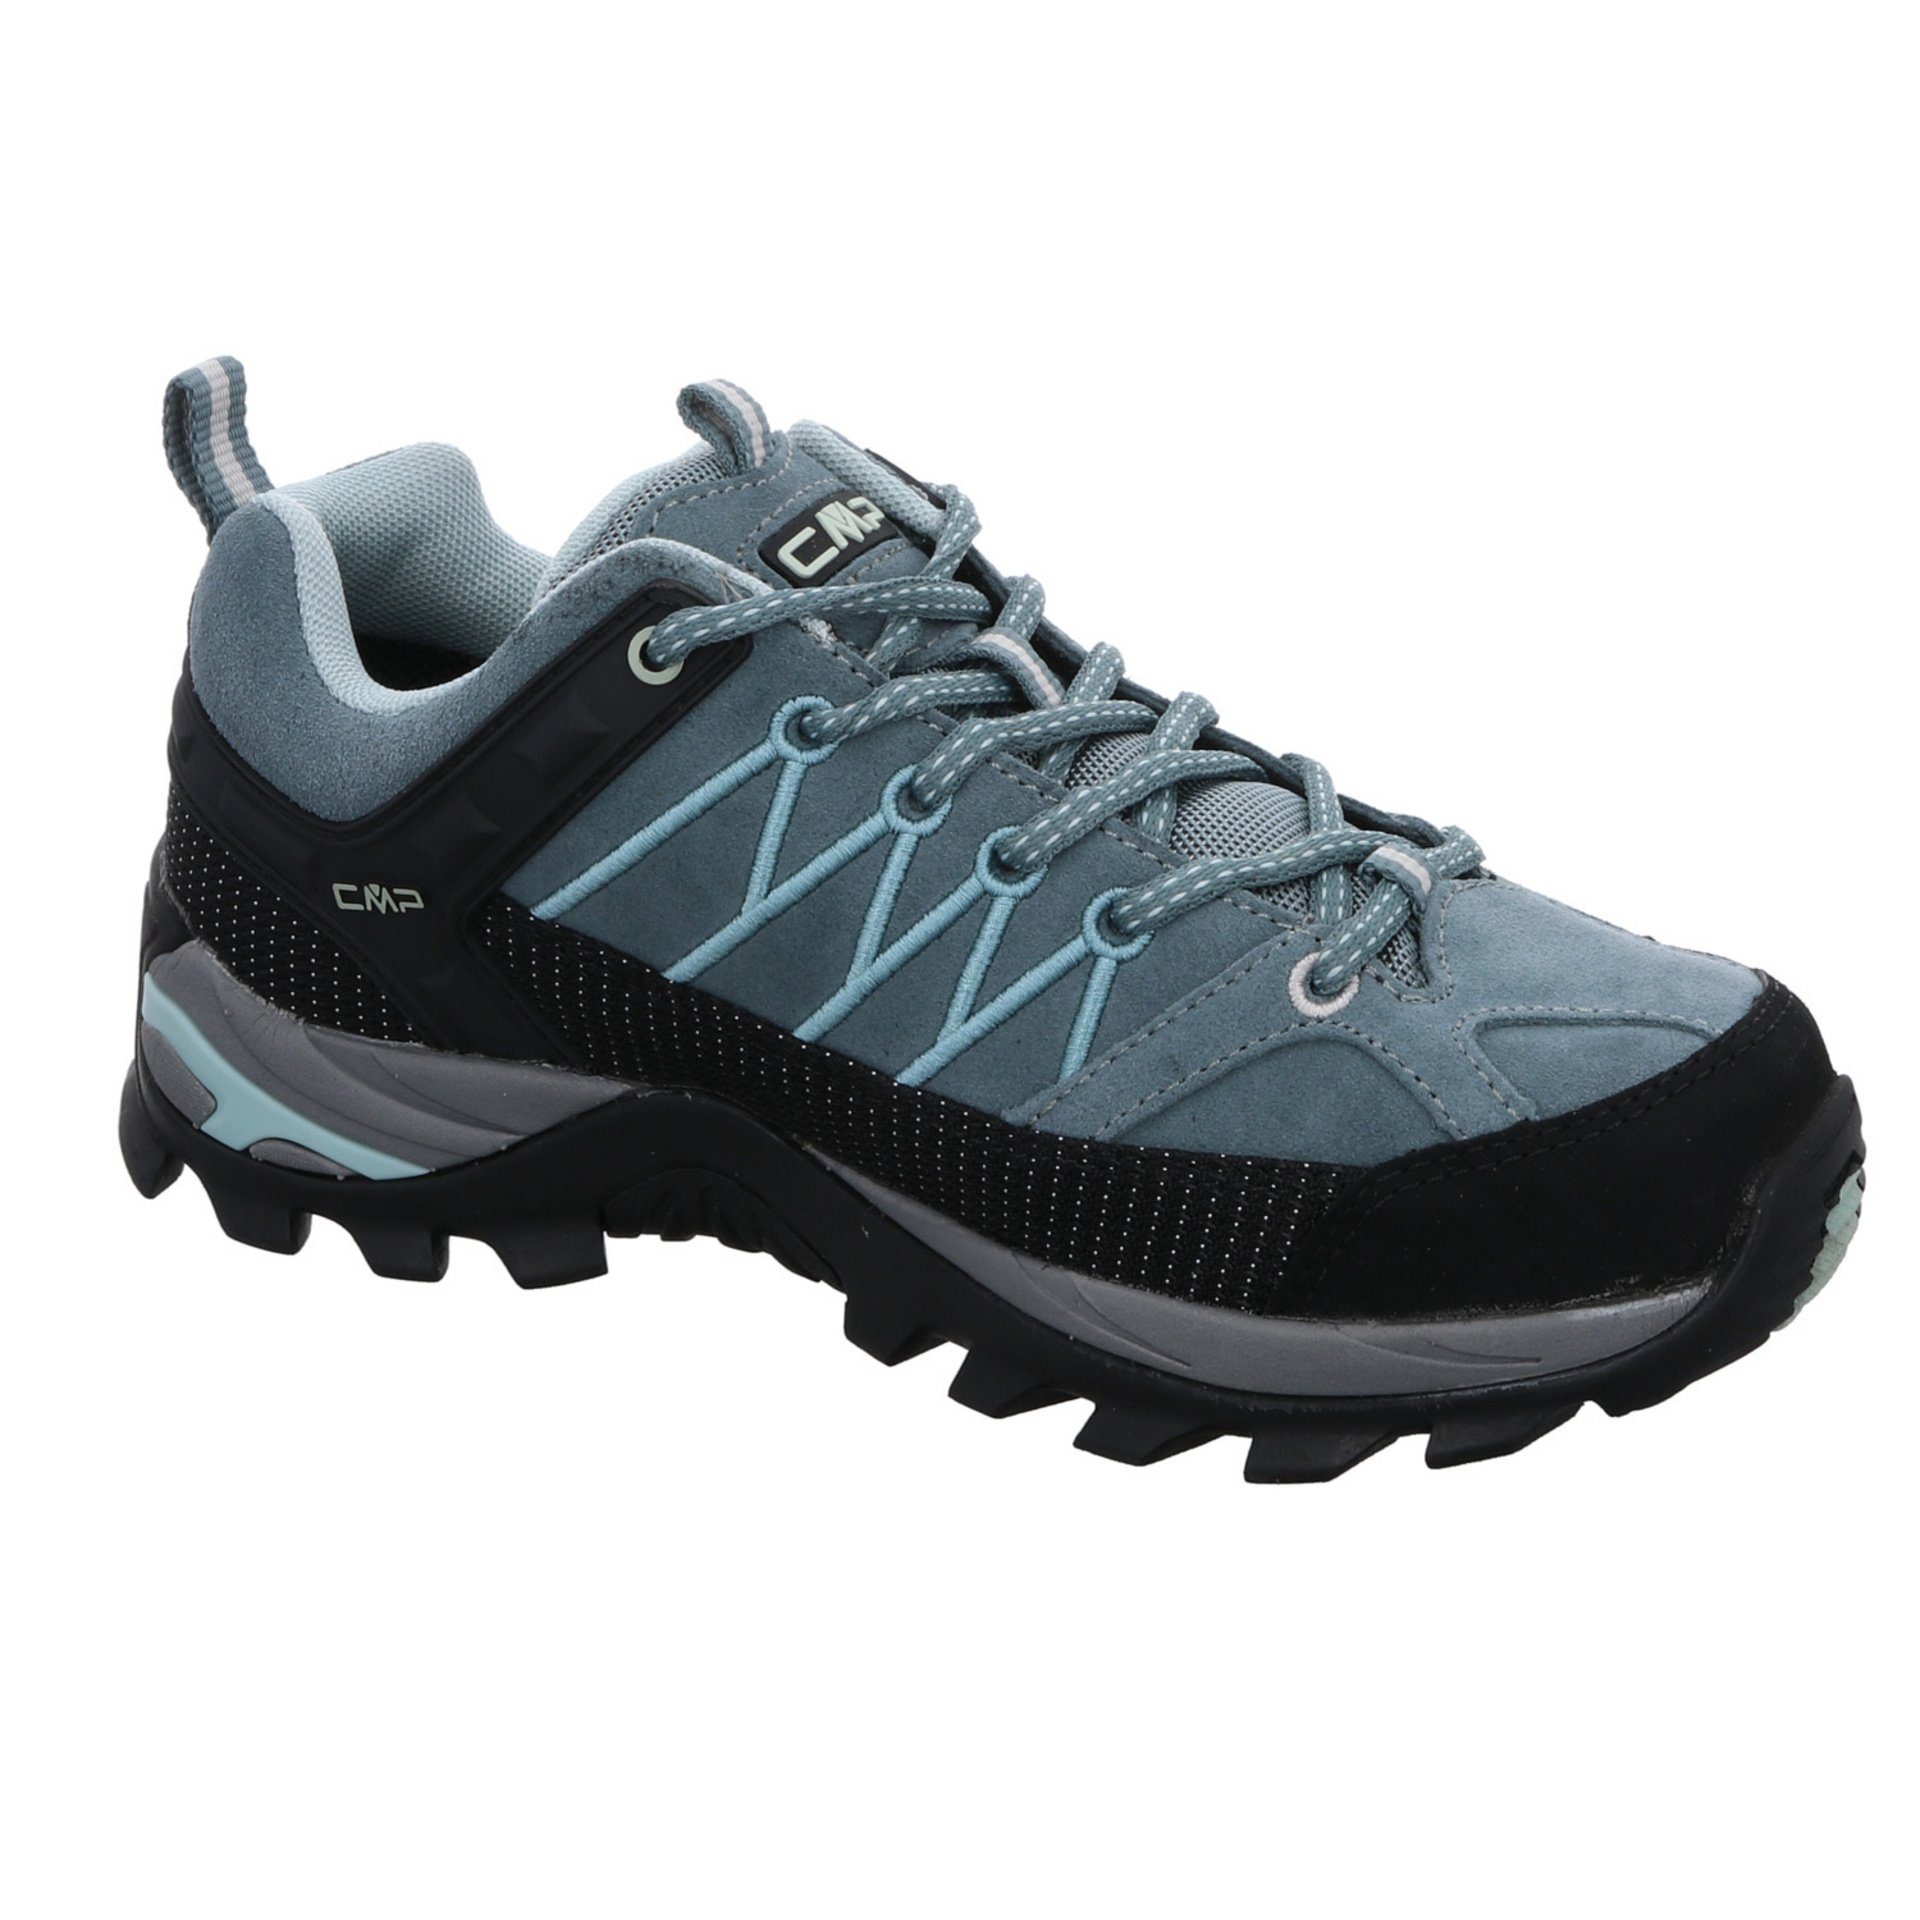 Damen Outdoorschuh Kombi sonst Rigel Outdoor Low Leder-/Textilkombination Outdoorschuh CAMPAGNOLO blau CMP Schuhe